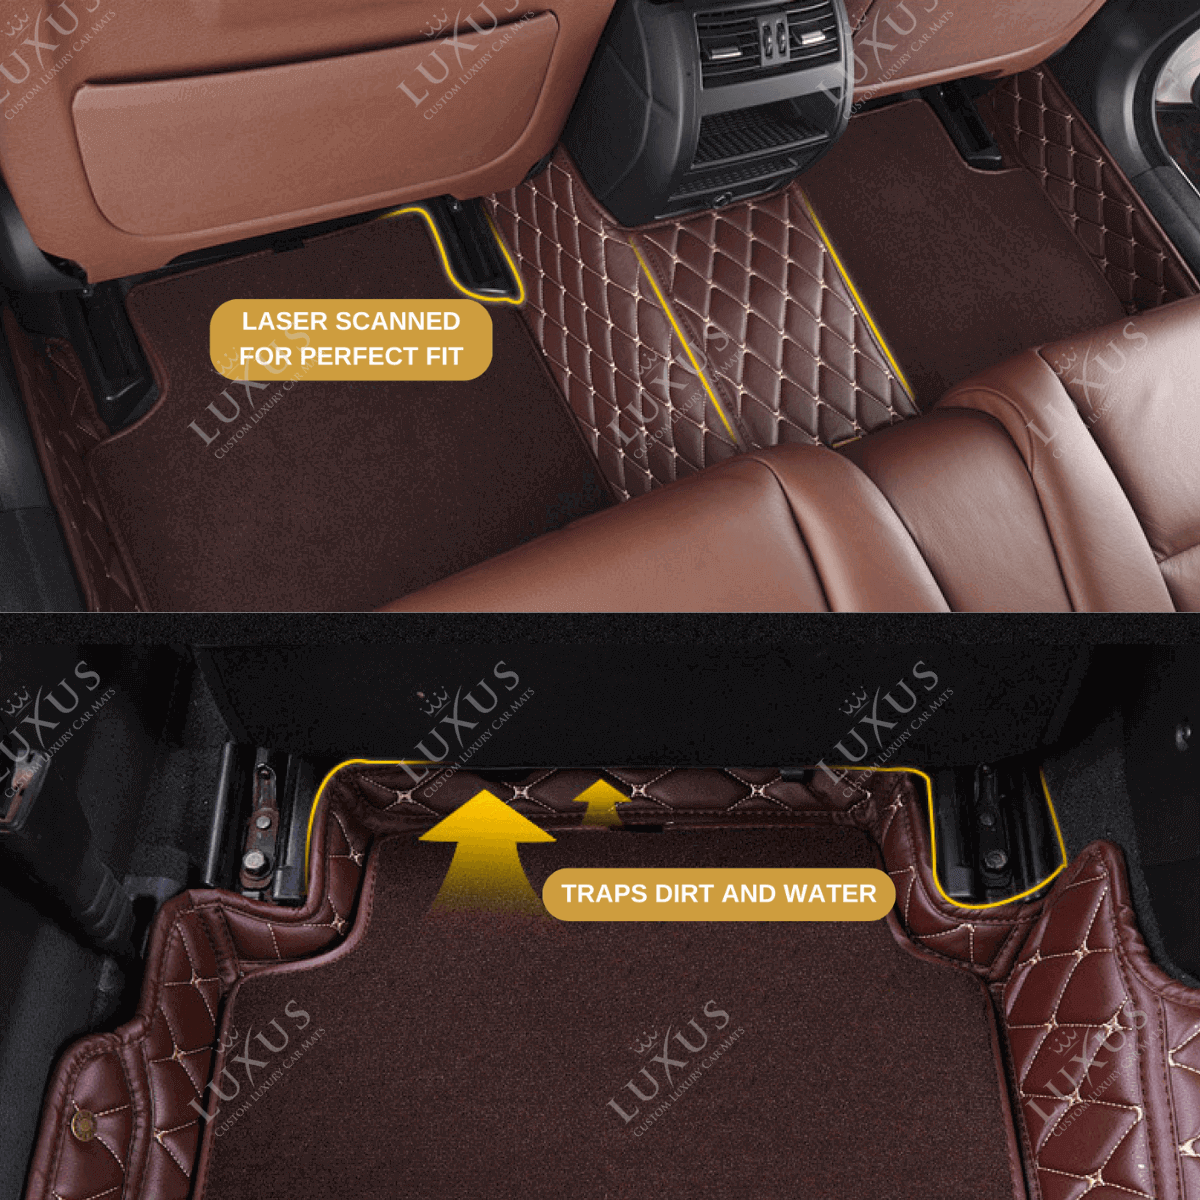 Black & Black Stitching Honeycomb Base & Brown Top Carpet Double Layer Luxury Car Mats Set